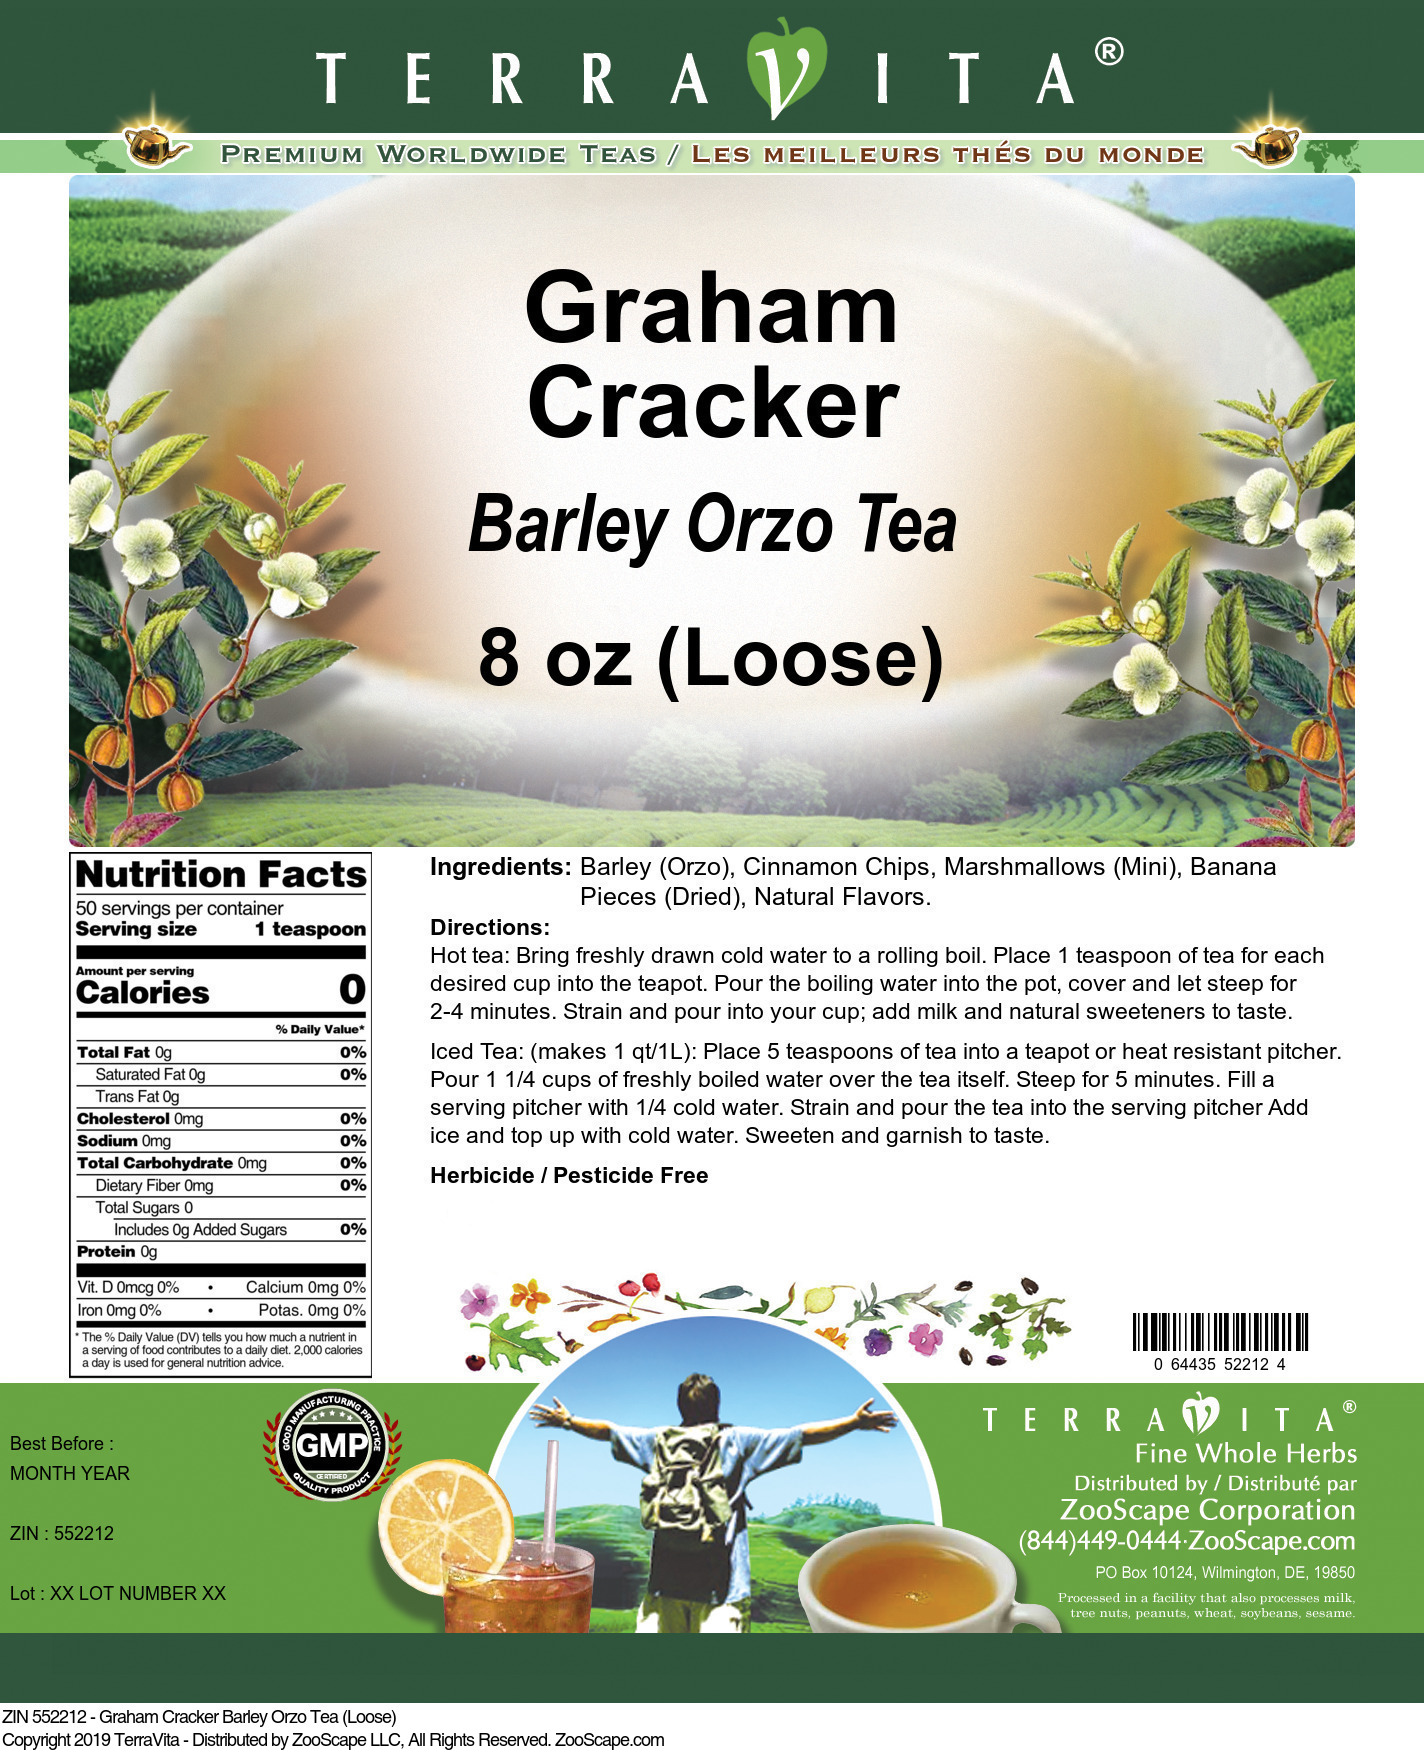 Graham Cracker Barley Orzo Tea (Loose) - Label